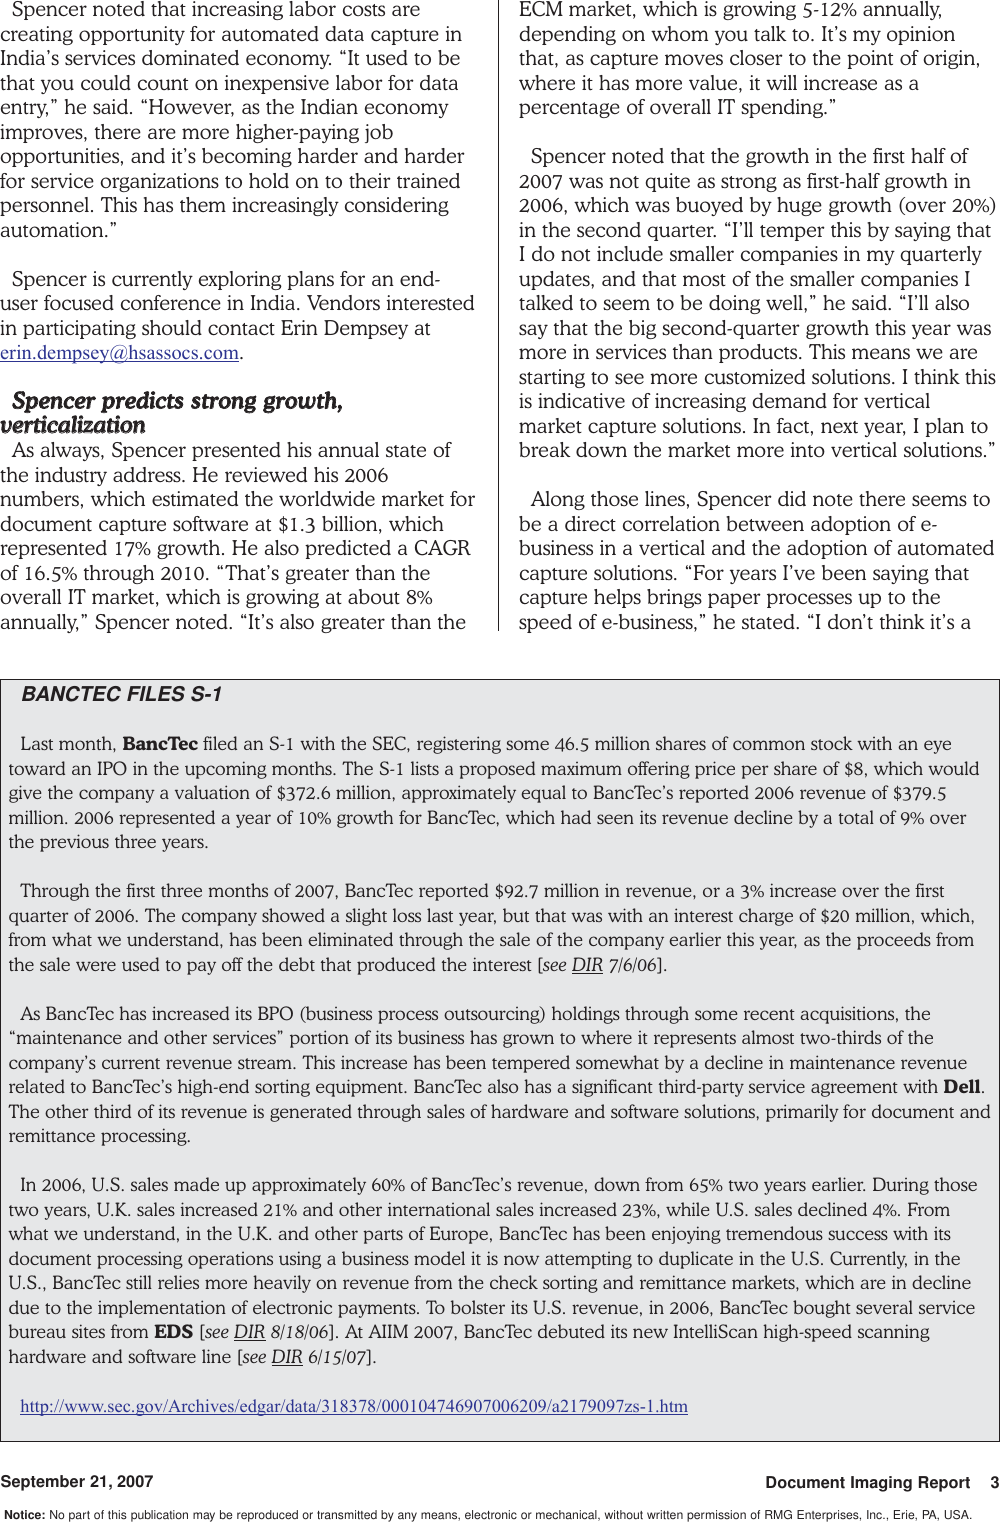 Page 3 of 8 - Fujitsu DIR 9-21-07 FCPA Upgrades Dept. Scanner Dir-092107 Review